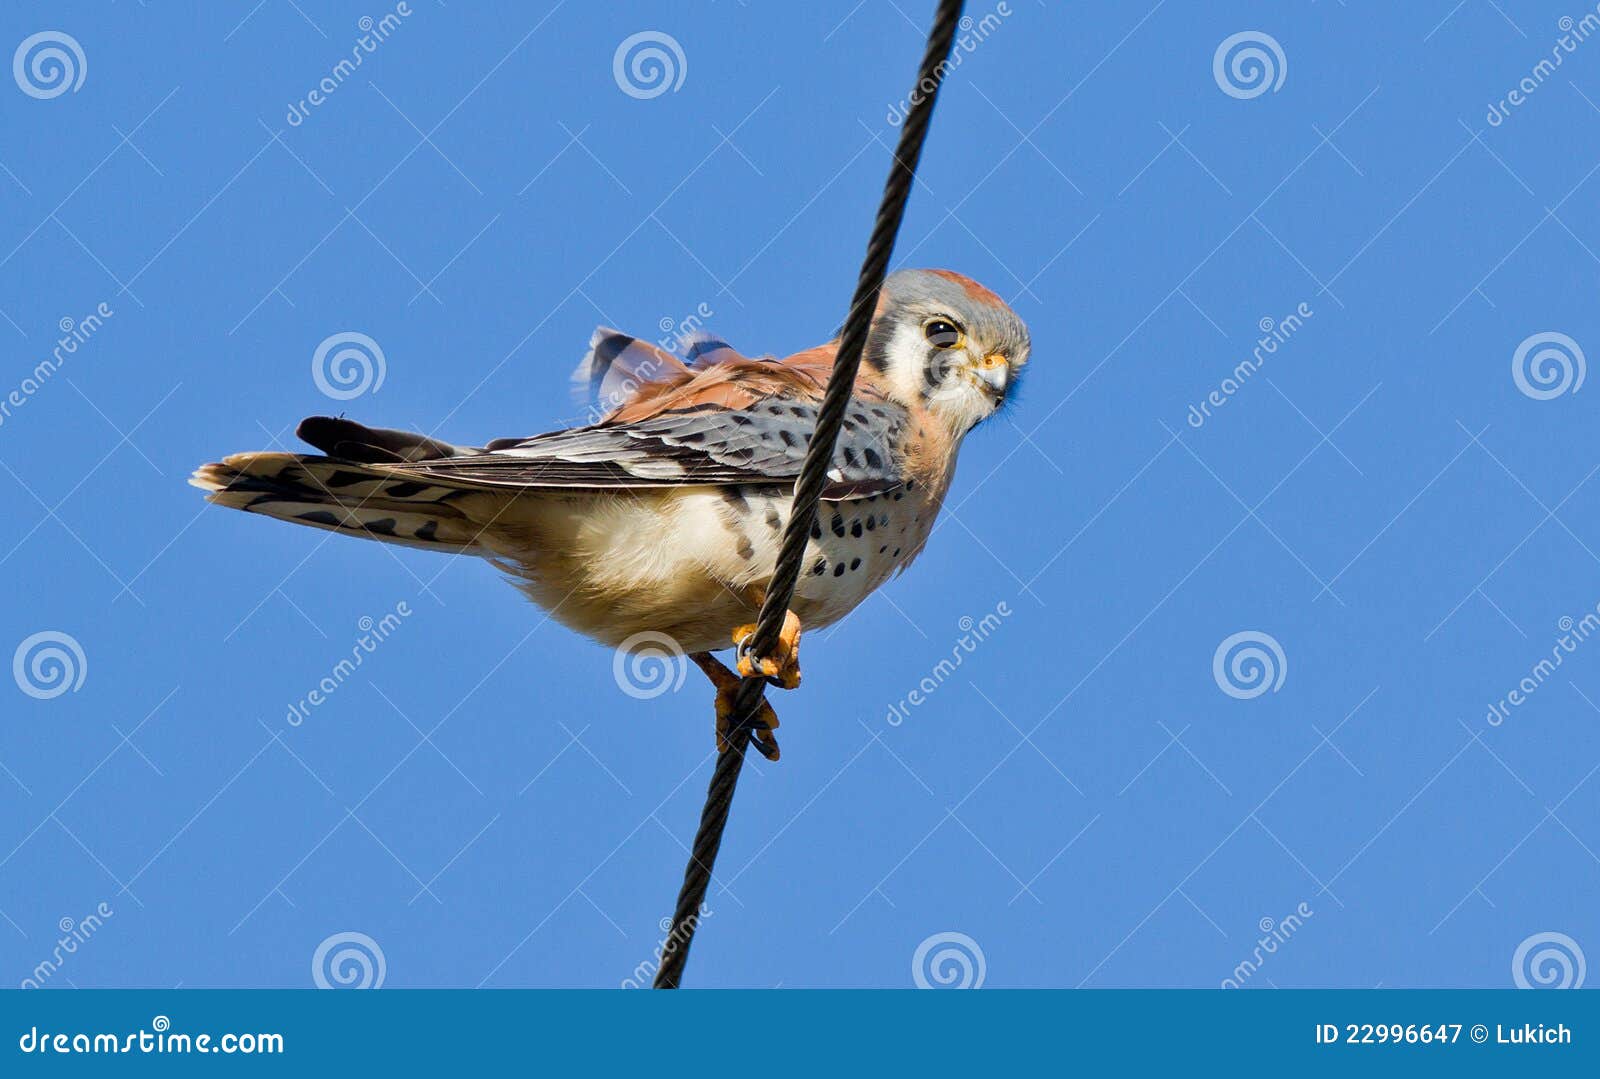 American Kestrel stock image. Image of falcon, birding - 22996647